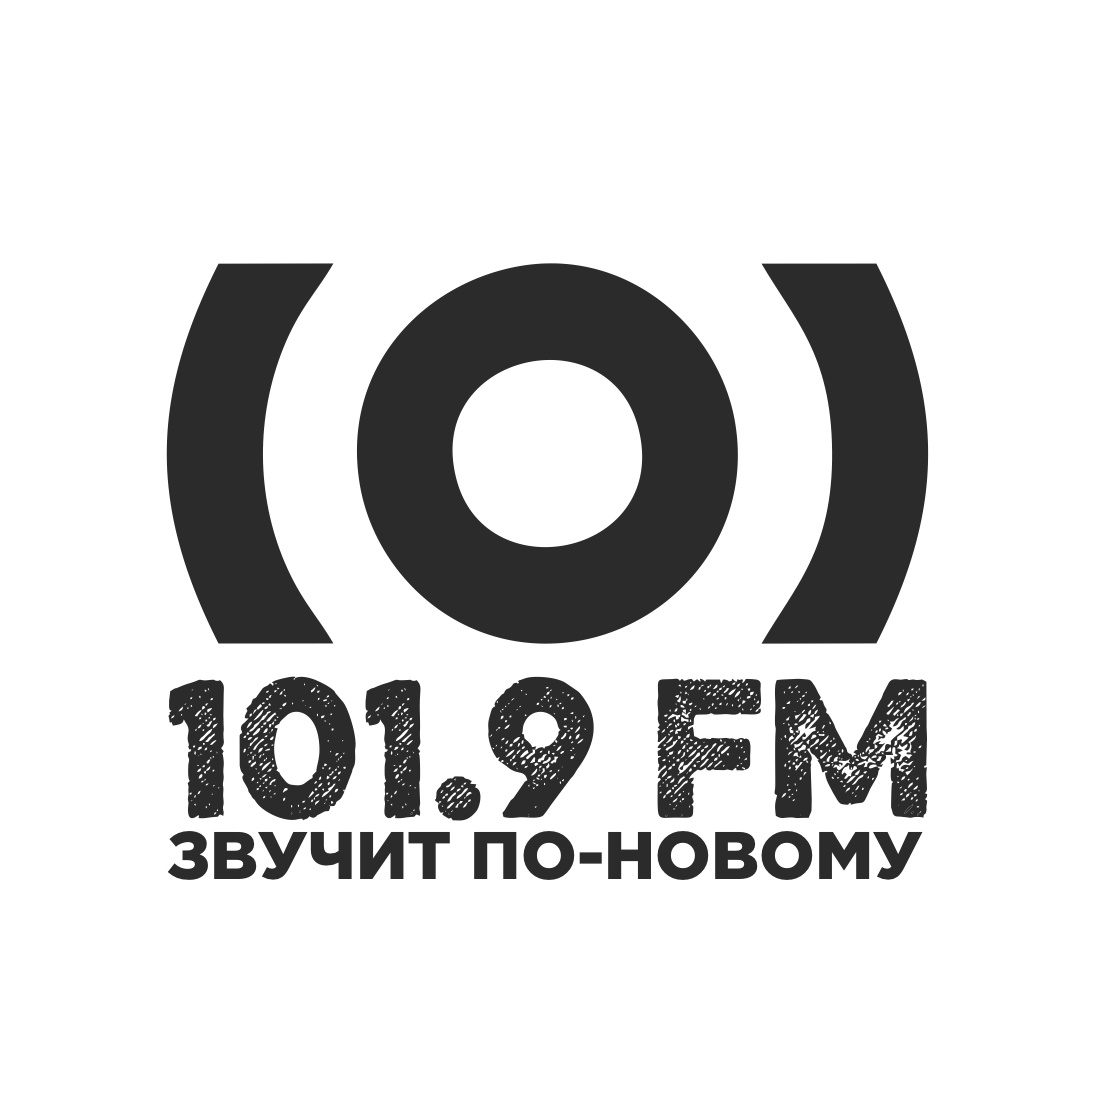 Радио 101. (Радио ТВС) 101,9 fm. Таганрог радио. Радио 101.4 Тюмень. 101.9 Fm Таганрог фото дикторов.